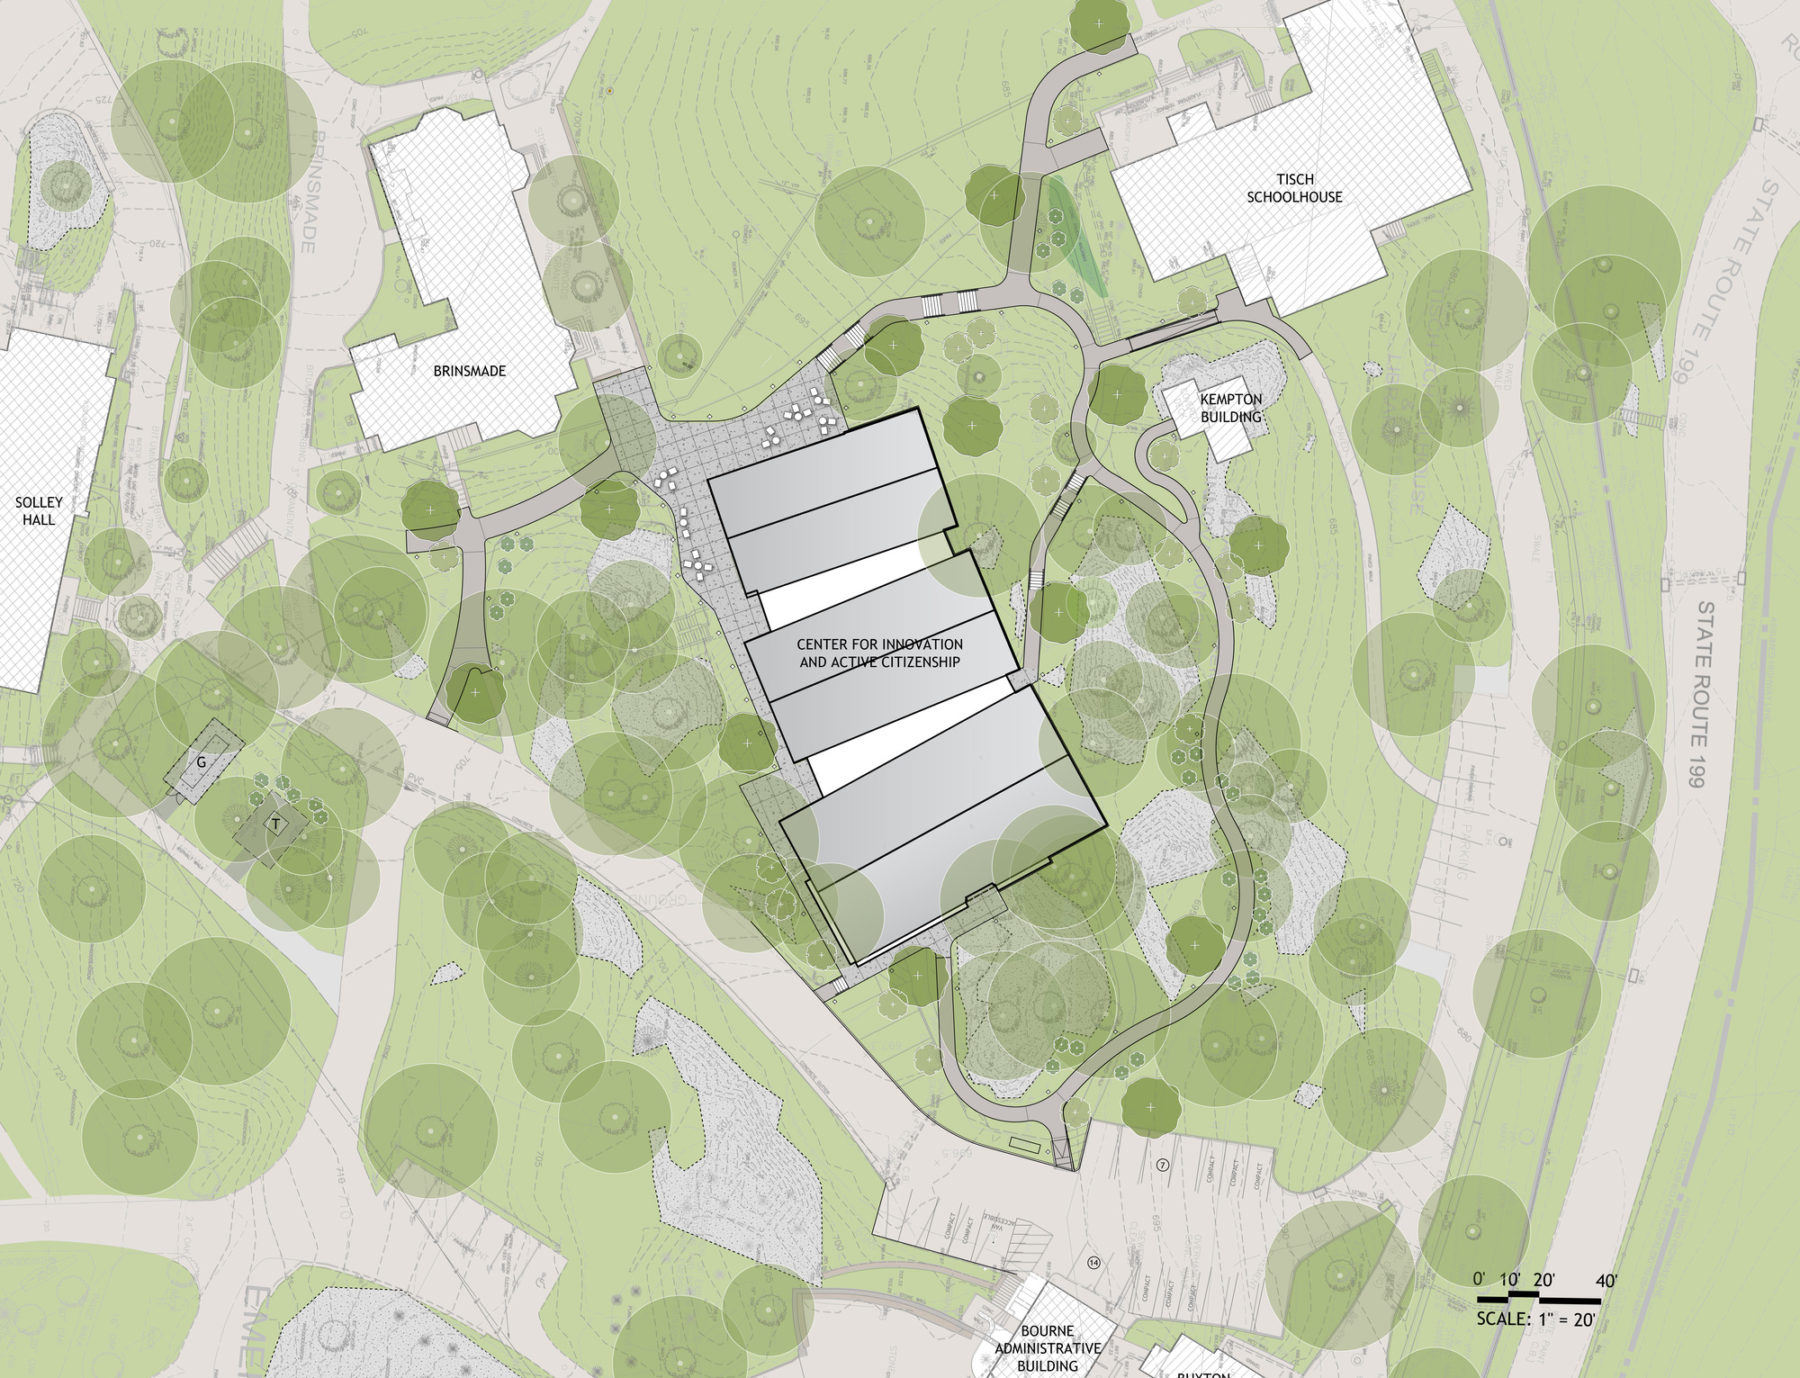 Landscape Plan at Gunn School Tisch Center for Innovation and Active Citizenship